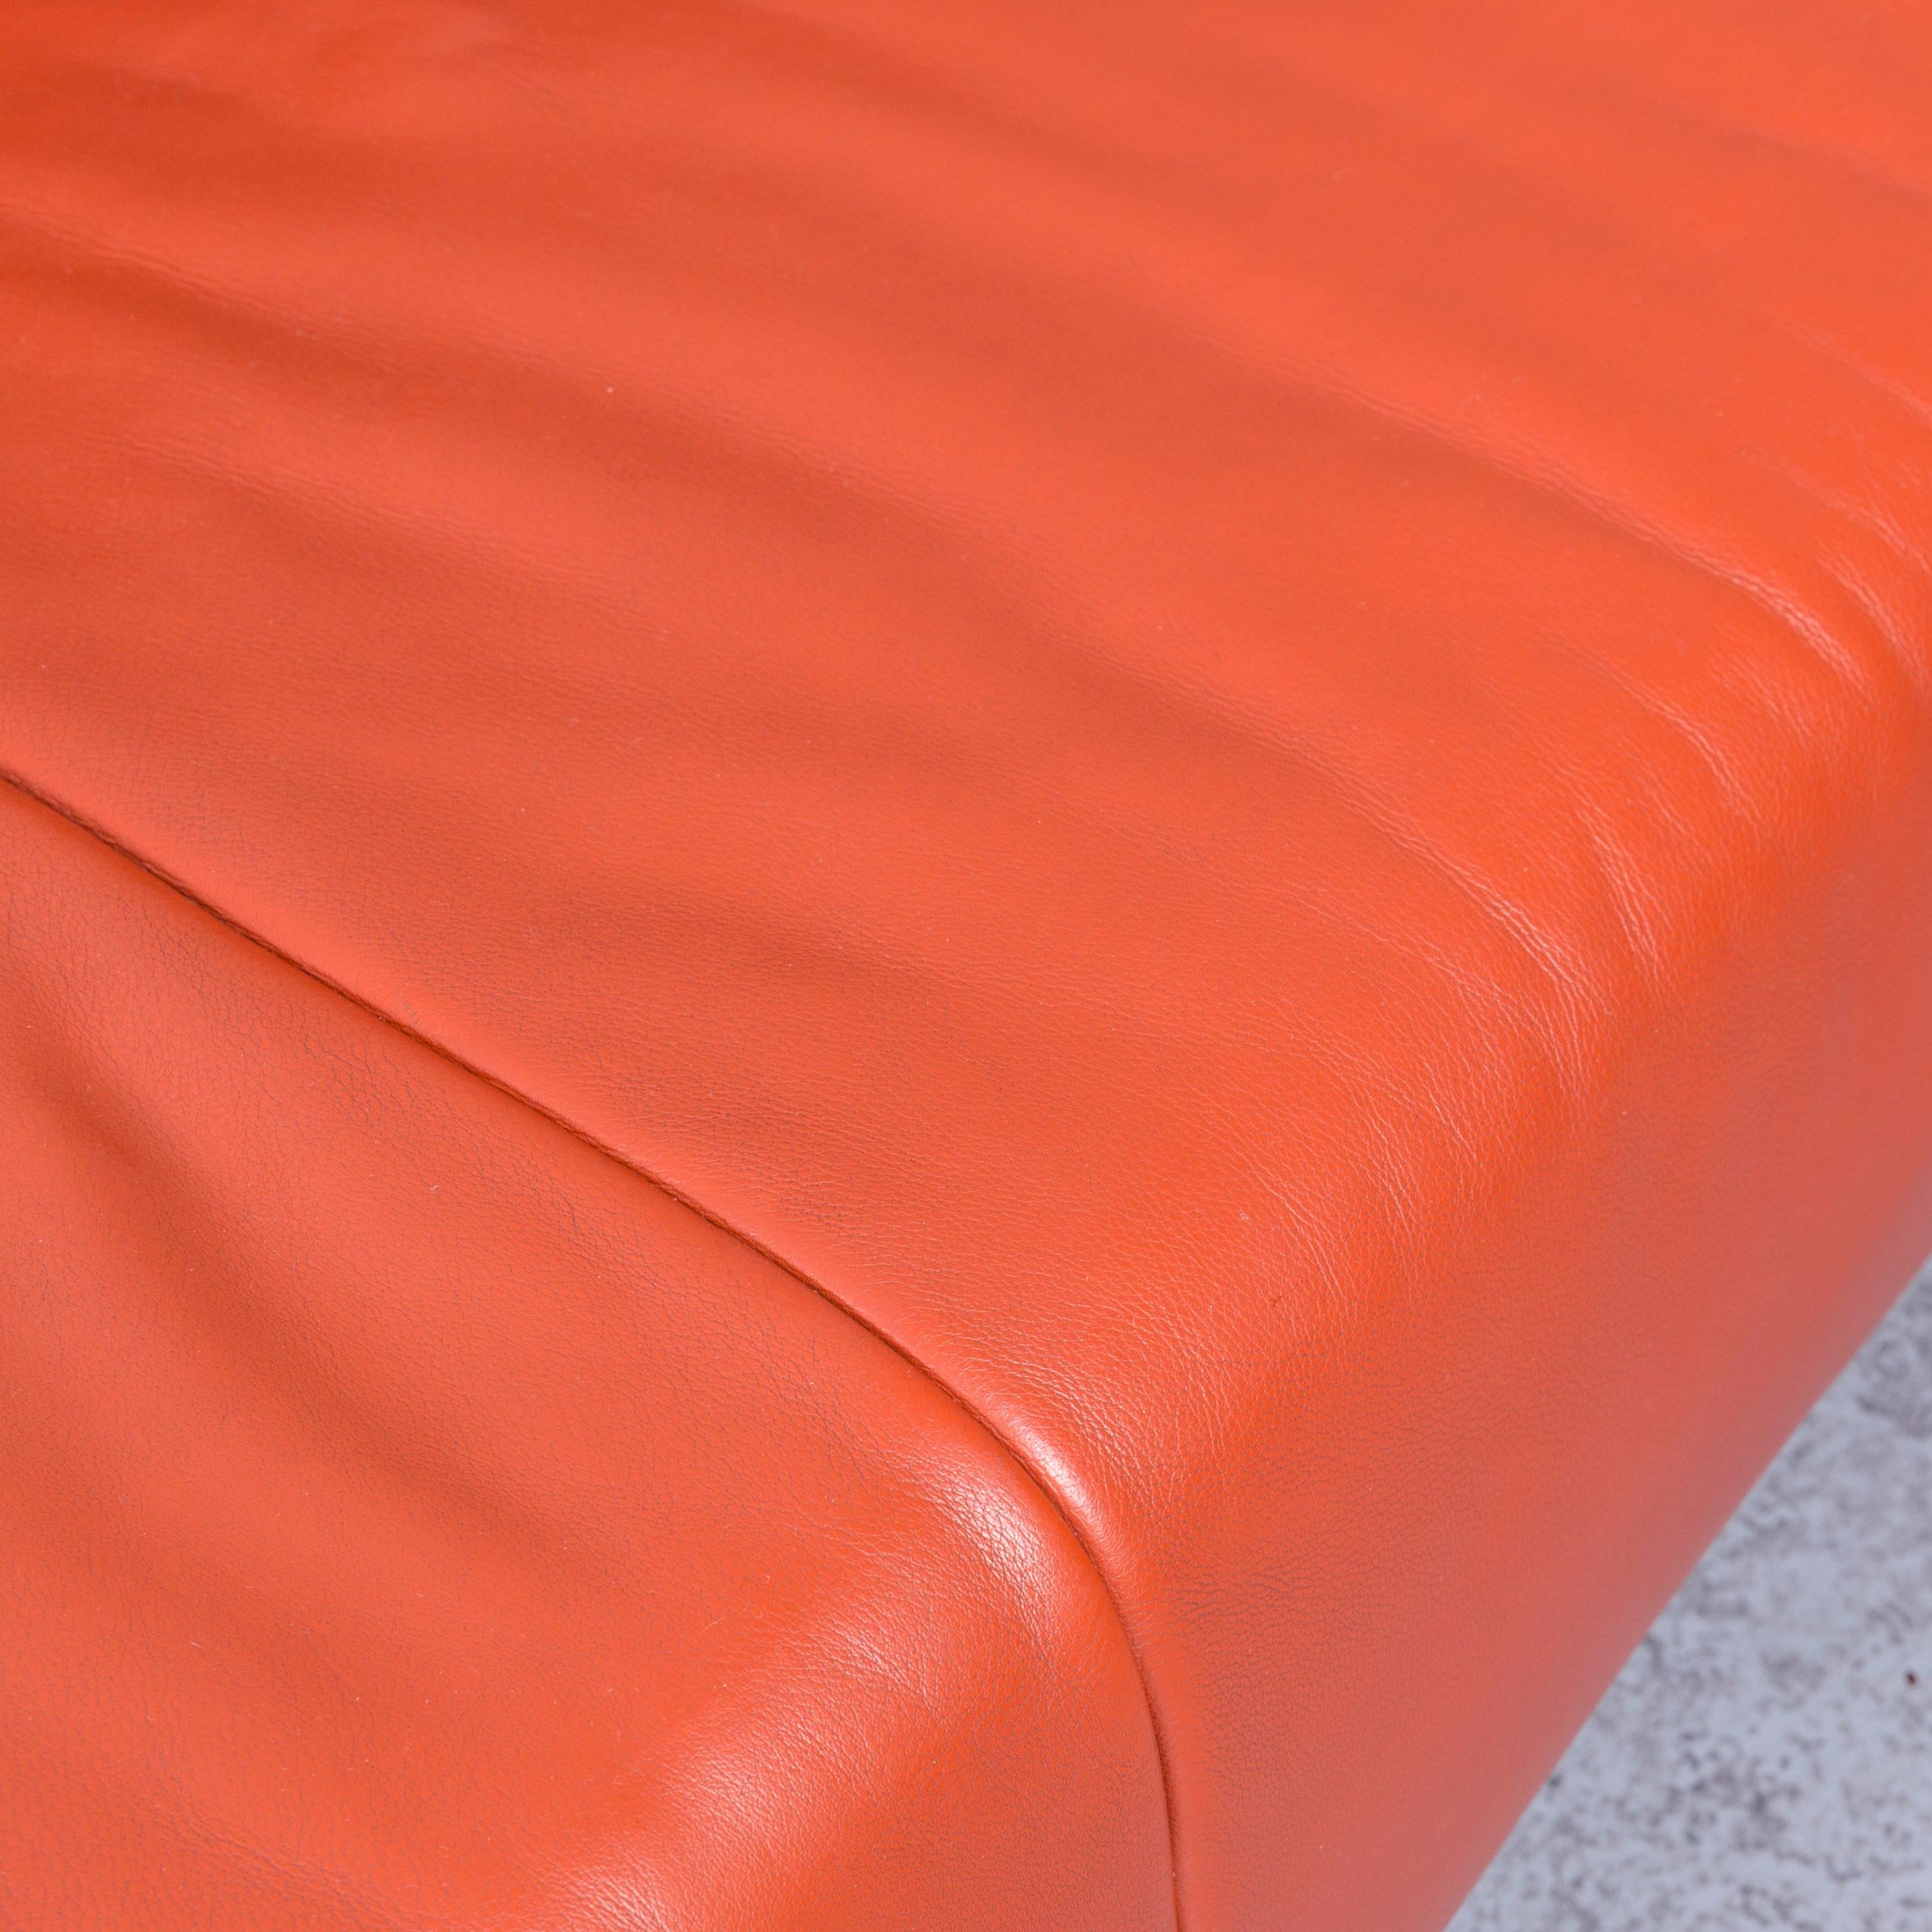 Koinor Designer Leather Sofa in Orange Corner-Sofa Couch 1